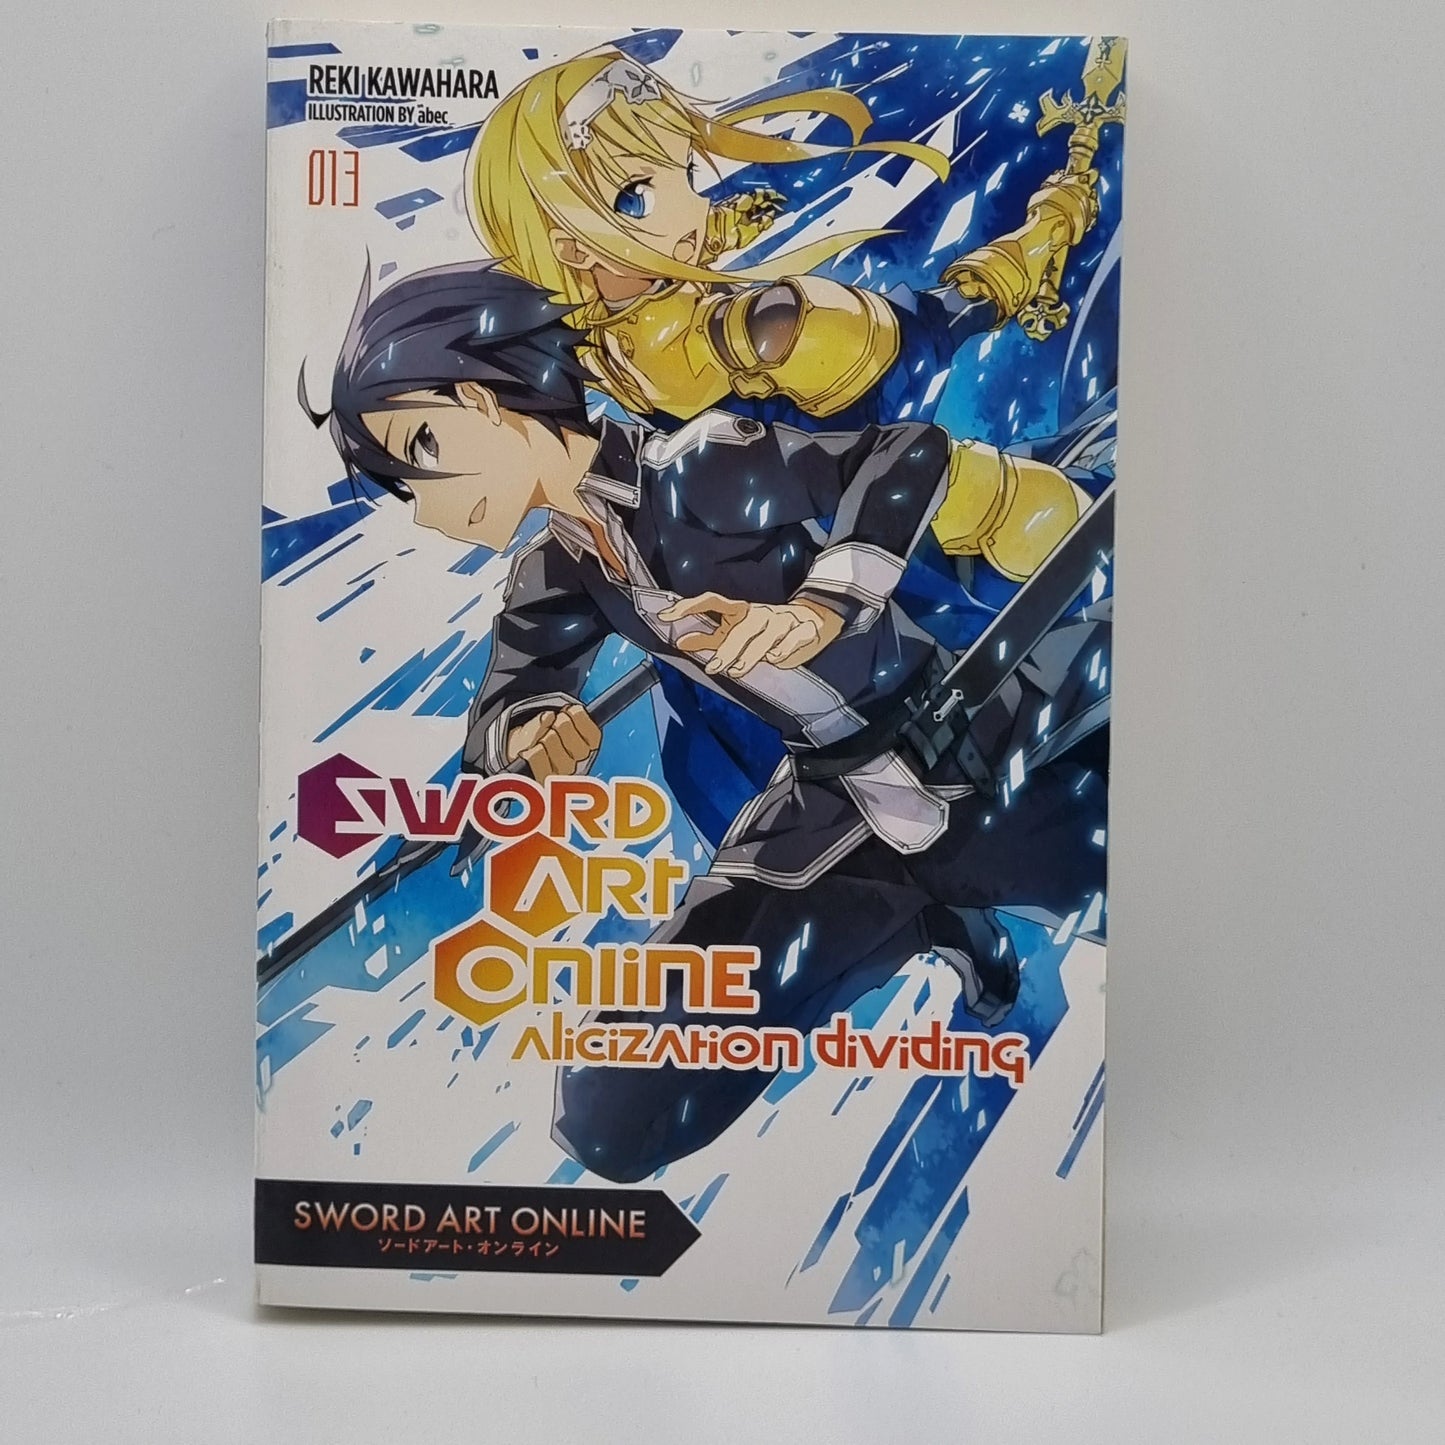 Sword Art Online: Alicization Dividing Manga Volume 13